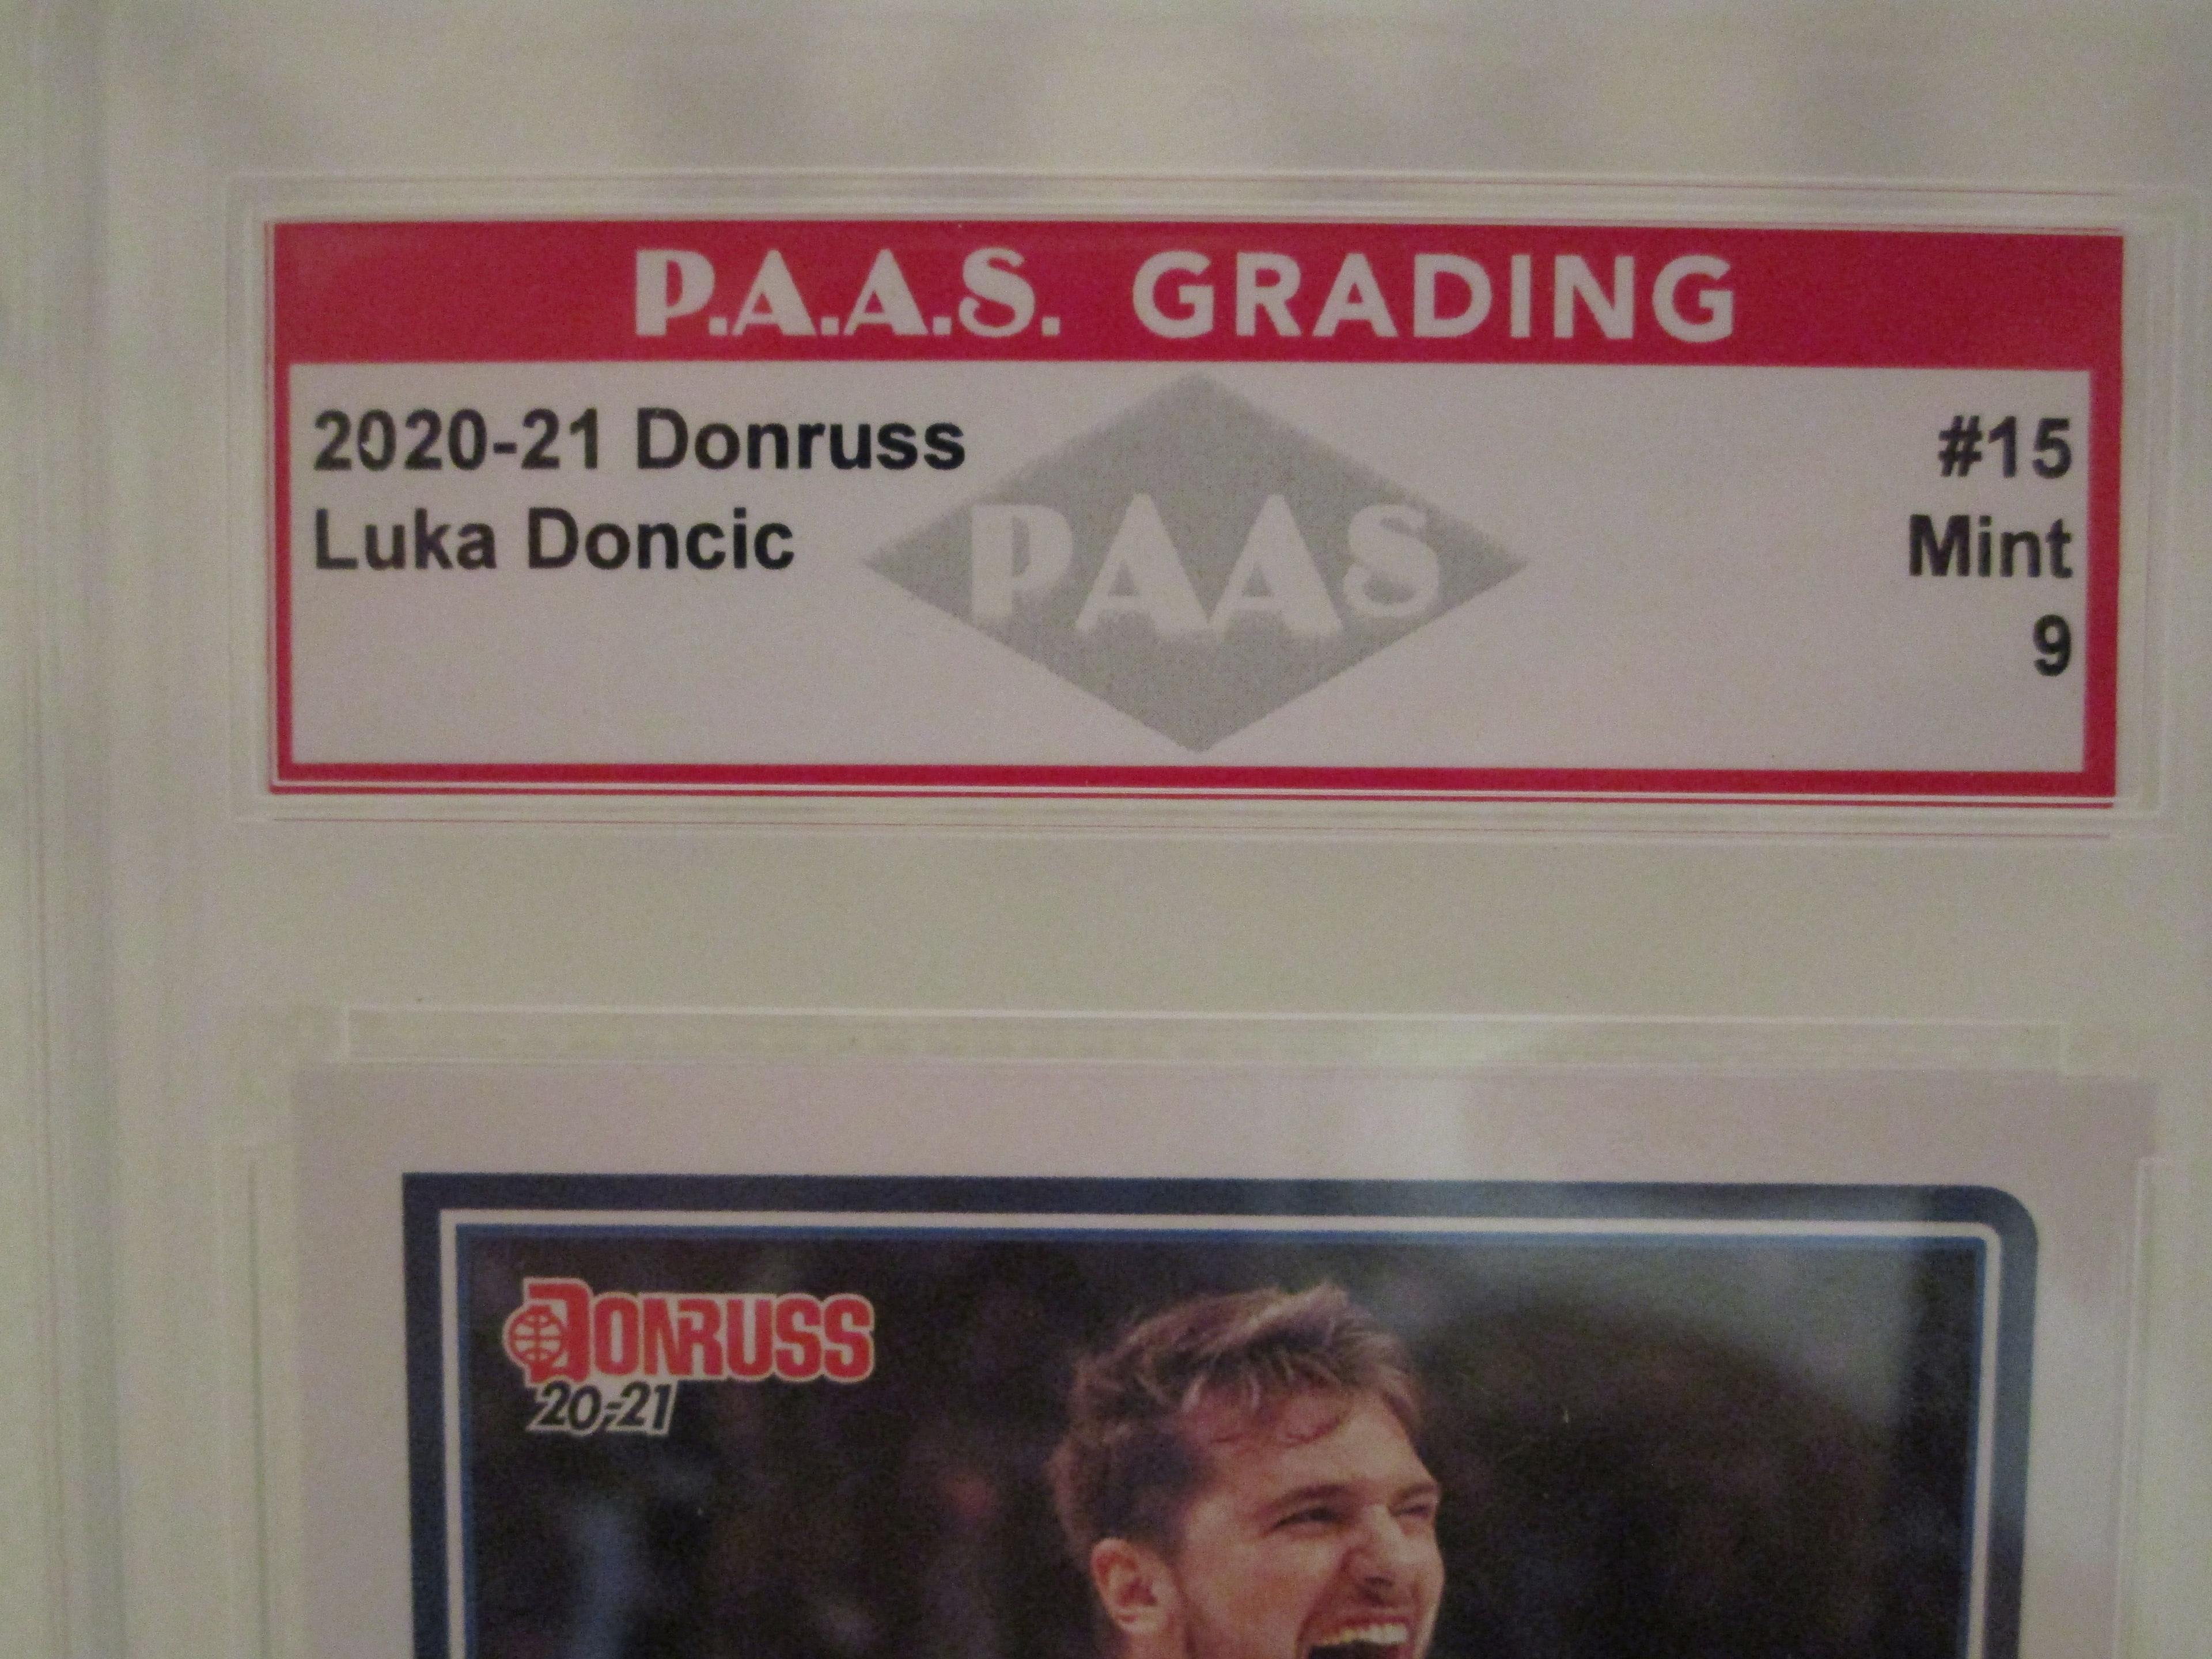 Luka Doncic Dallas Mavericks 2020-21 Donruss #15 PAAS graded Mint 9